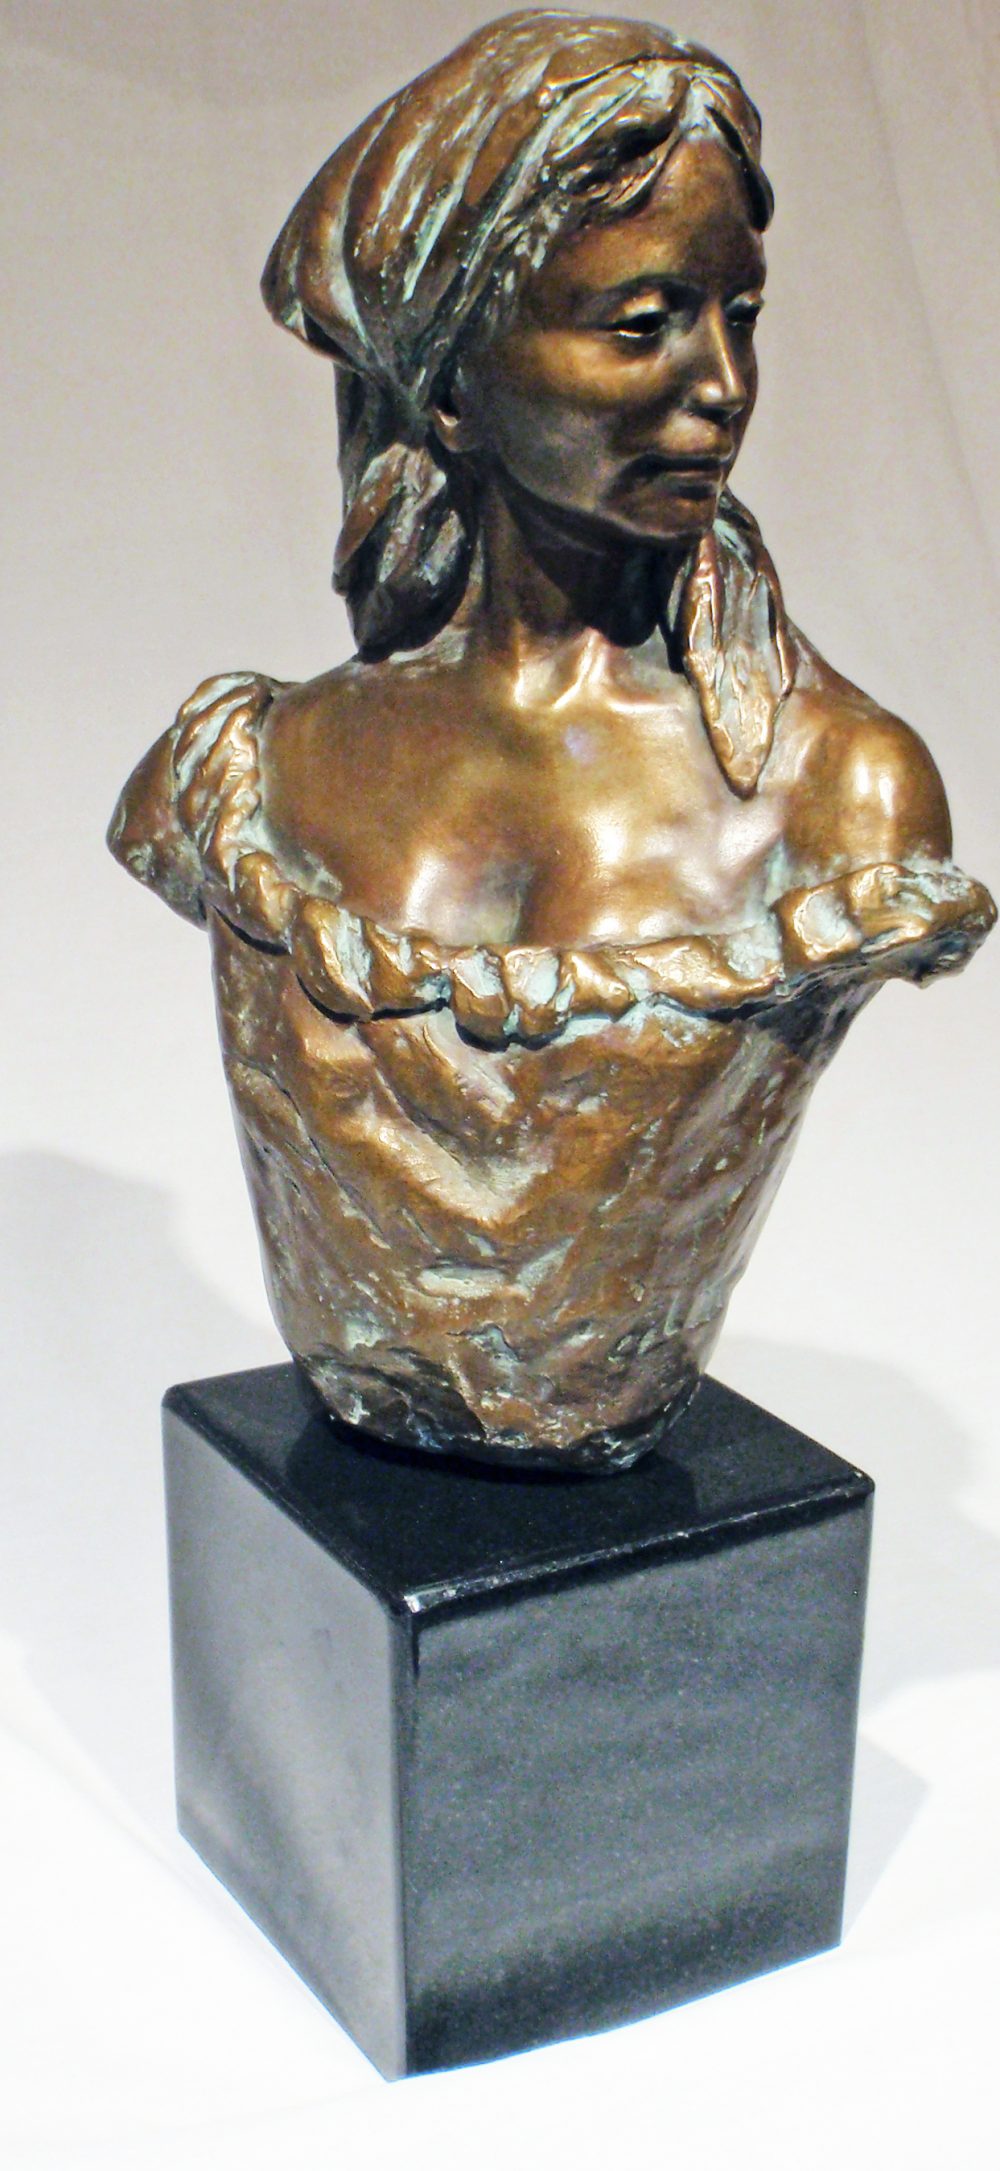 Chardonnay Bust | Susaane Vertel | Sculpture-Exposures International Gallery of Fine Art - Sedona AZ